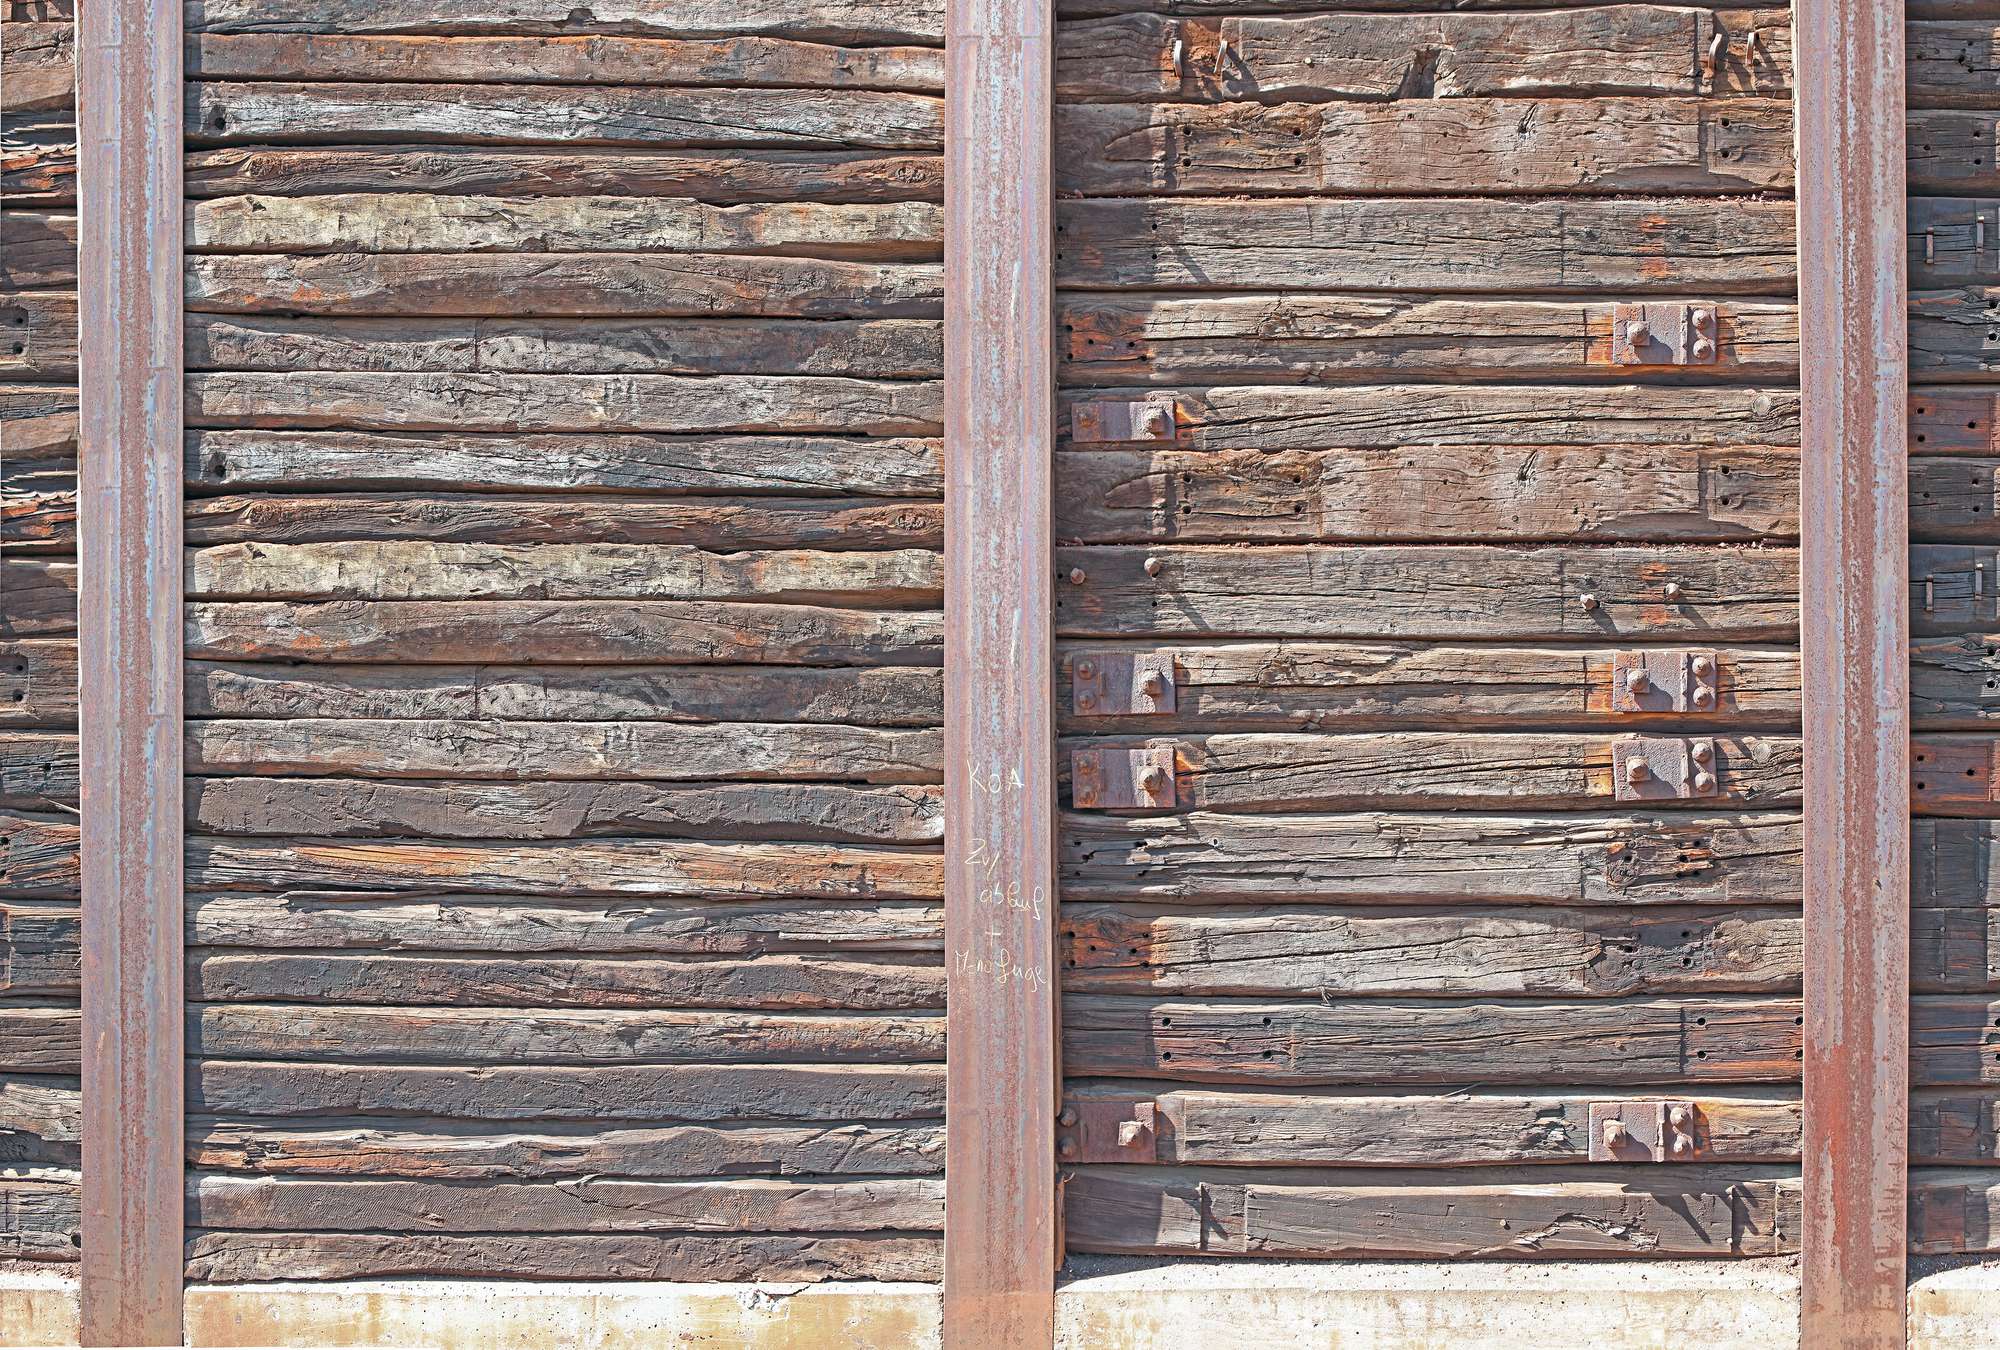             Photo wallpaper with rustic wooden planks between steel beams
        